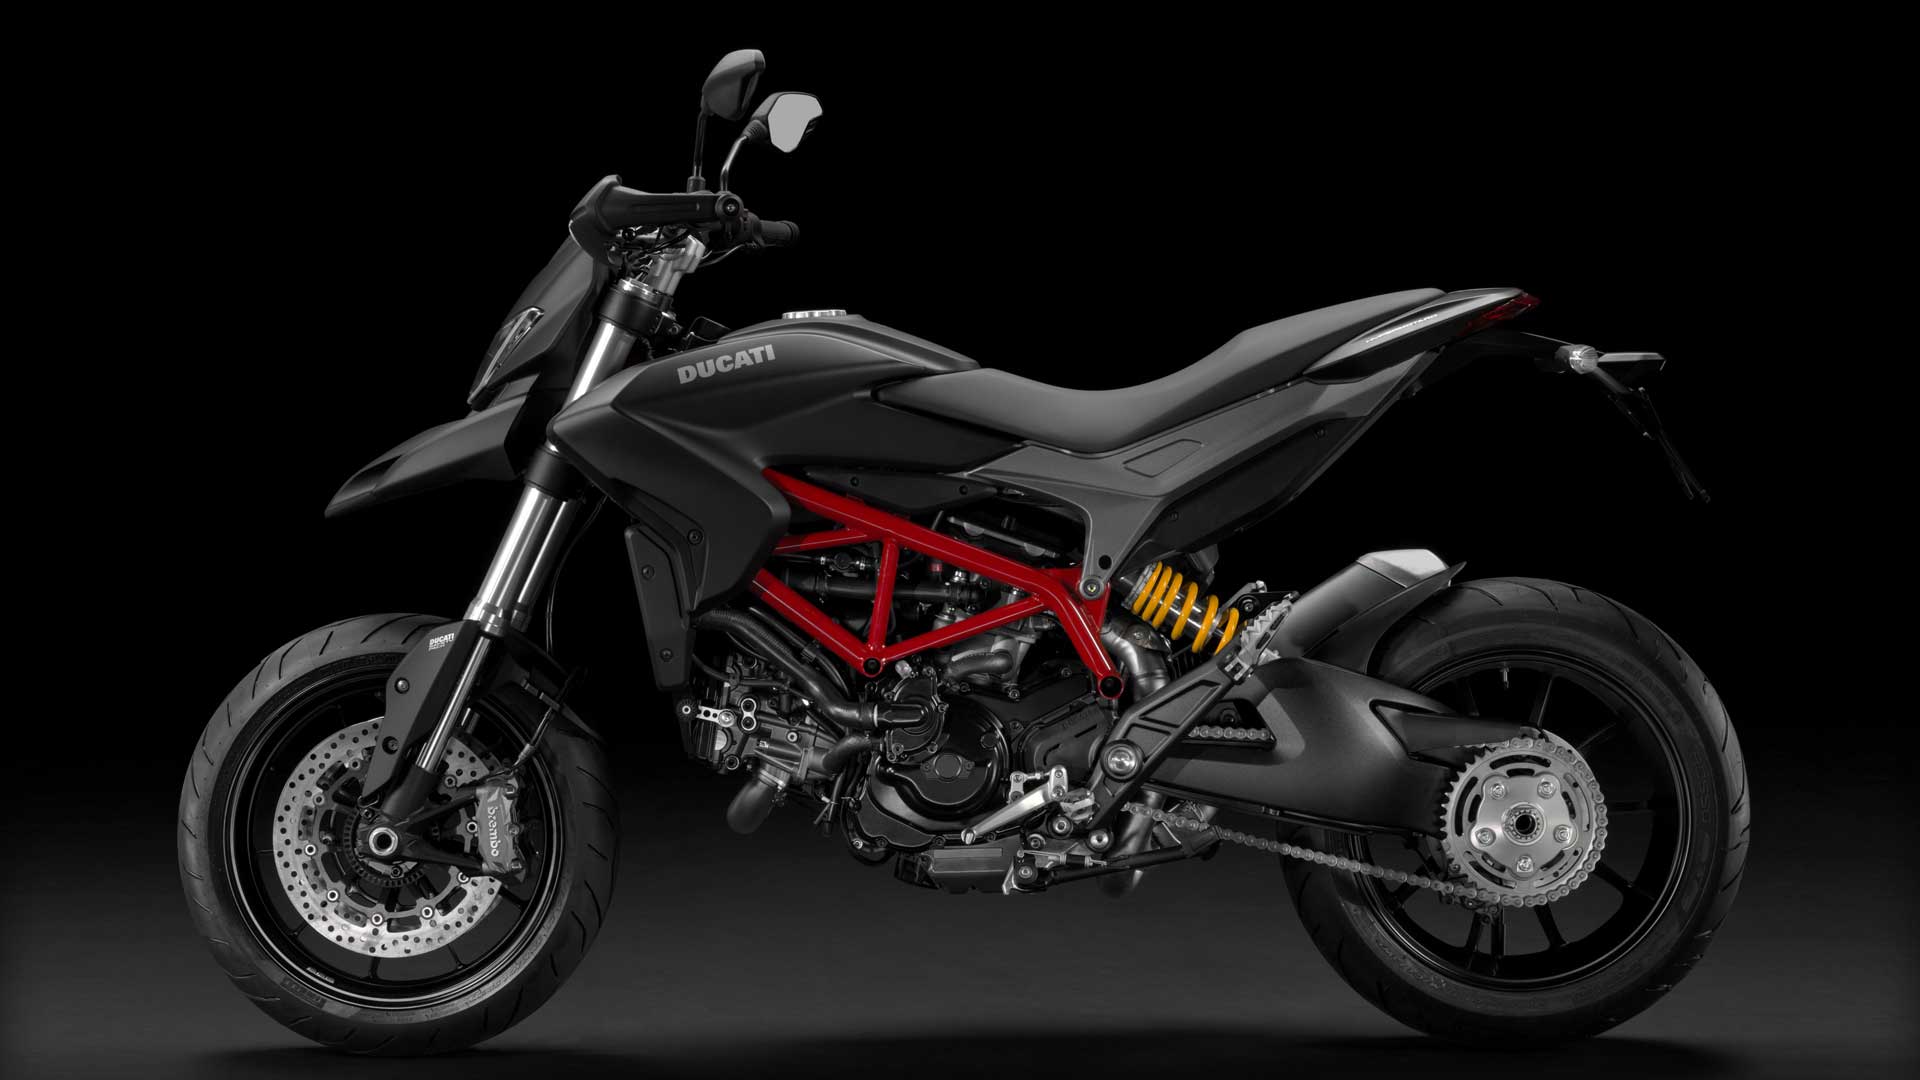 2014 Ducati Hypermotard 821 side view